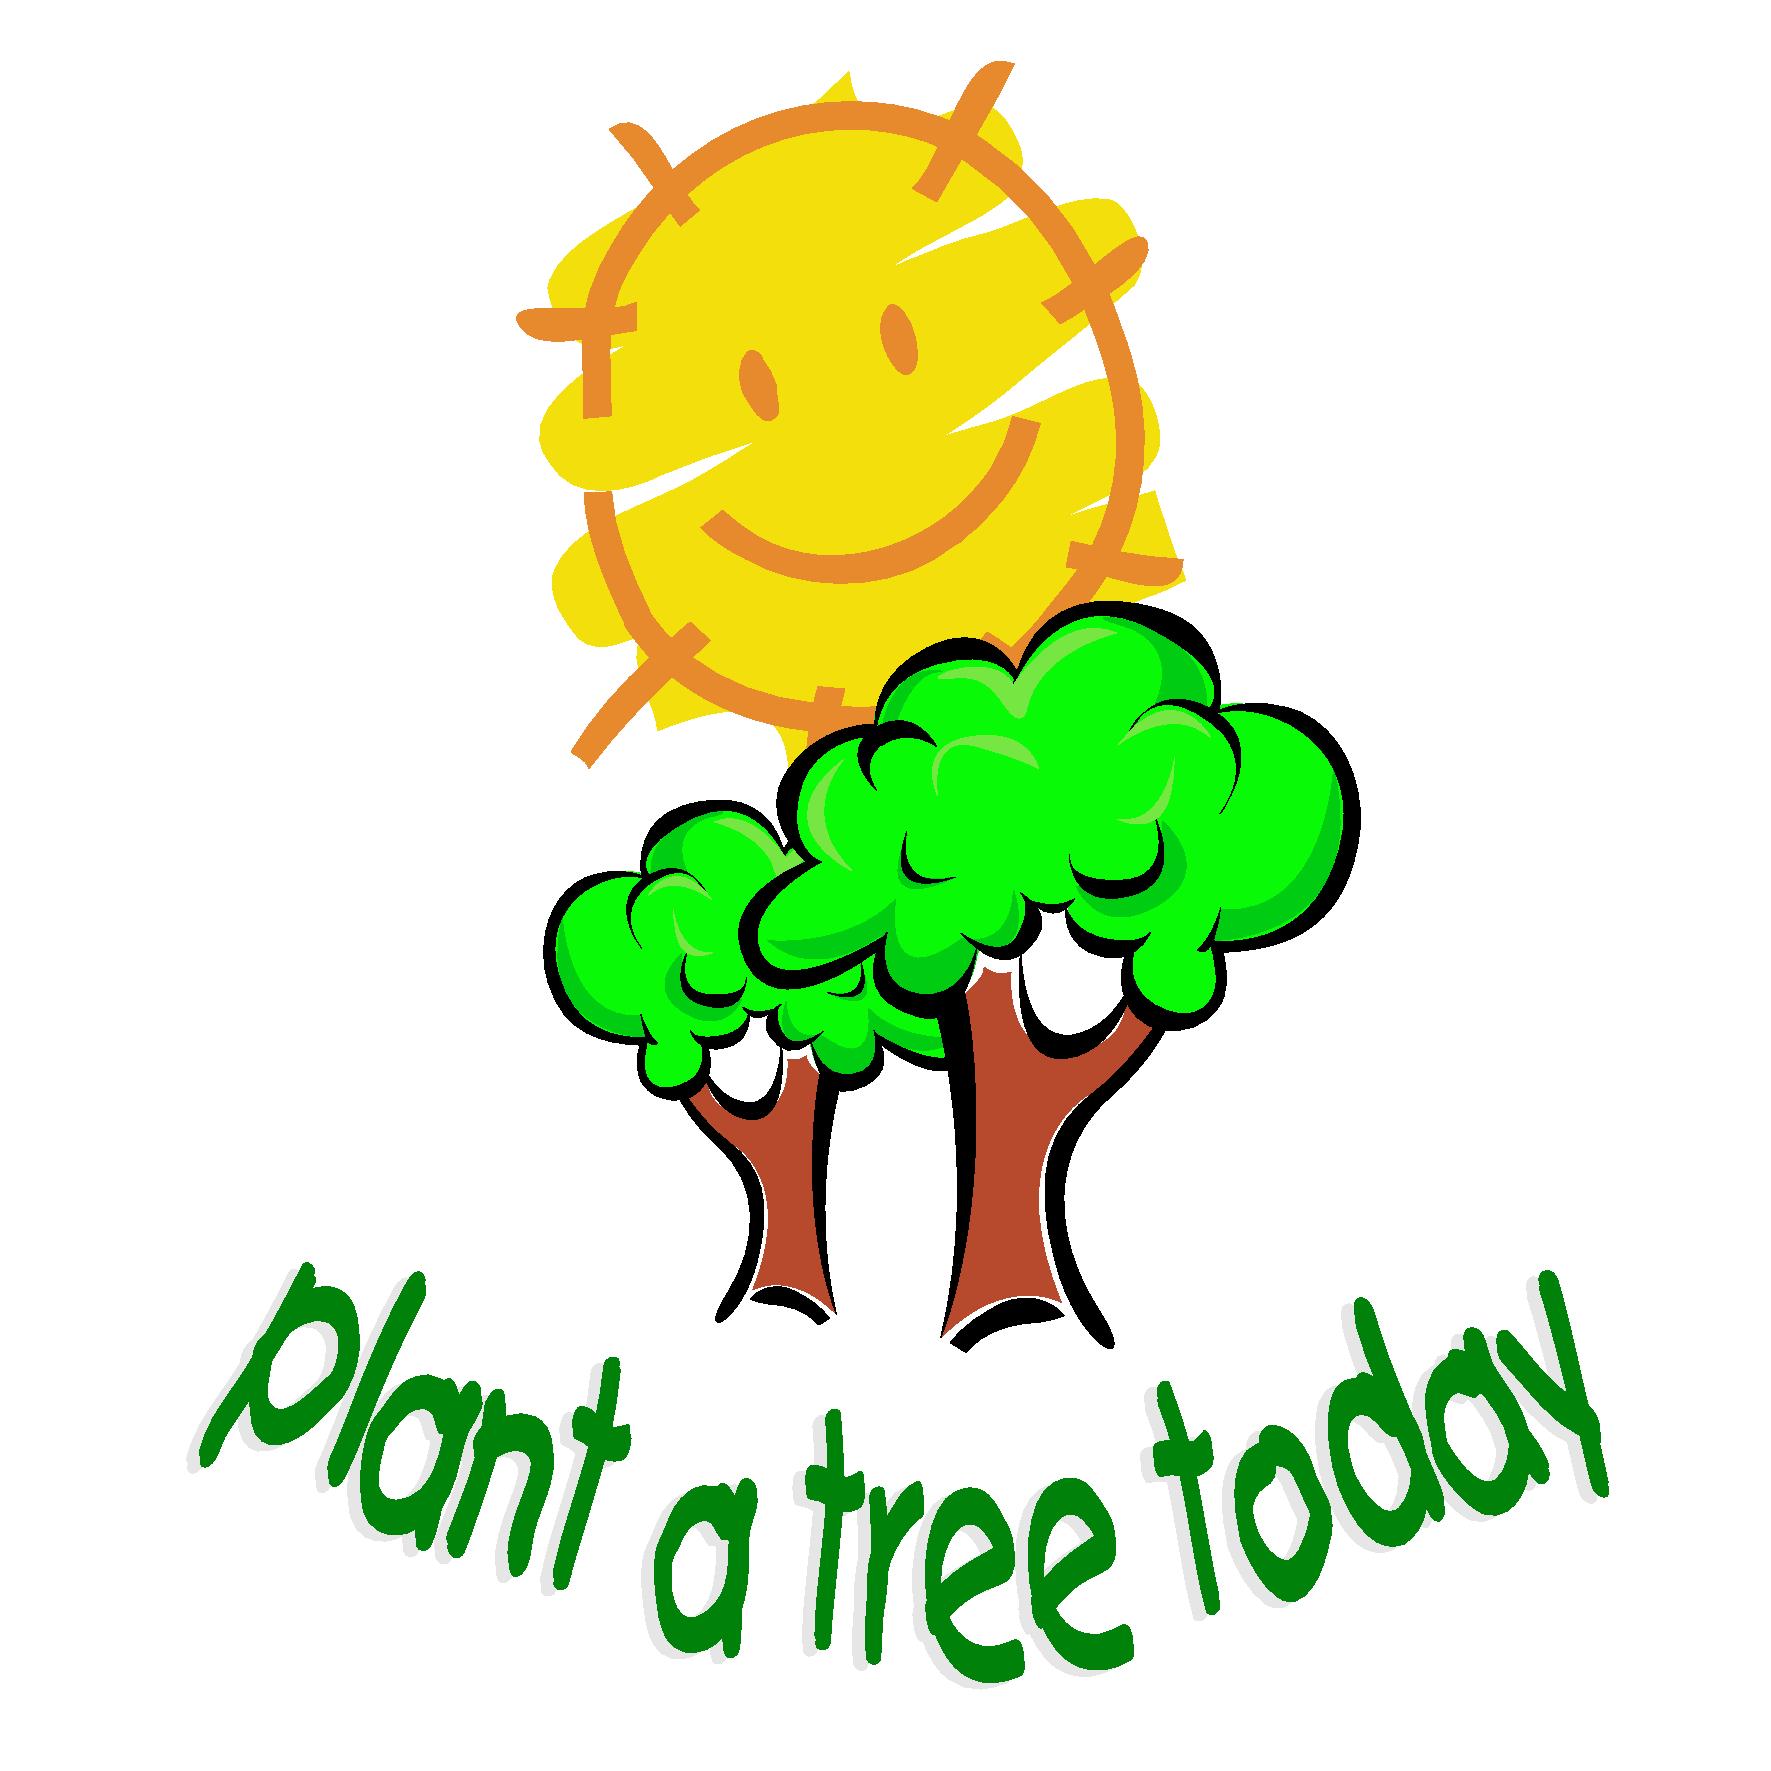 Plant A Tree Today Foundation - Wikipedia